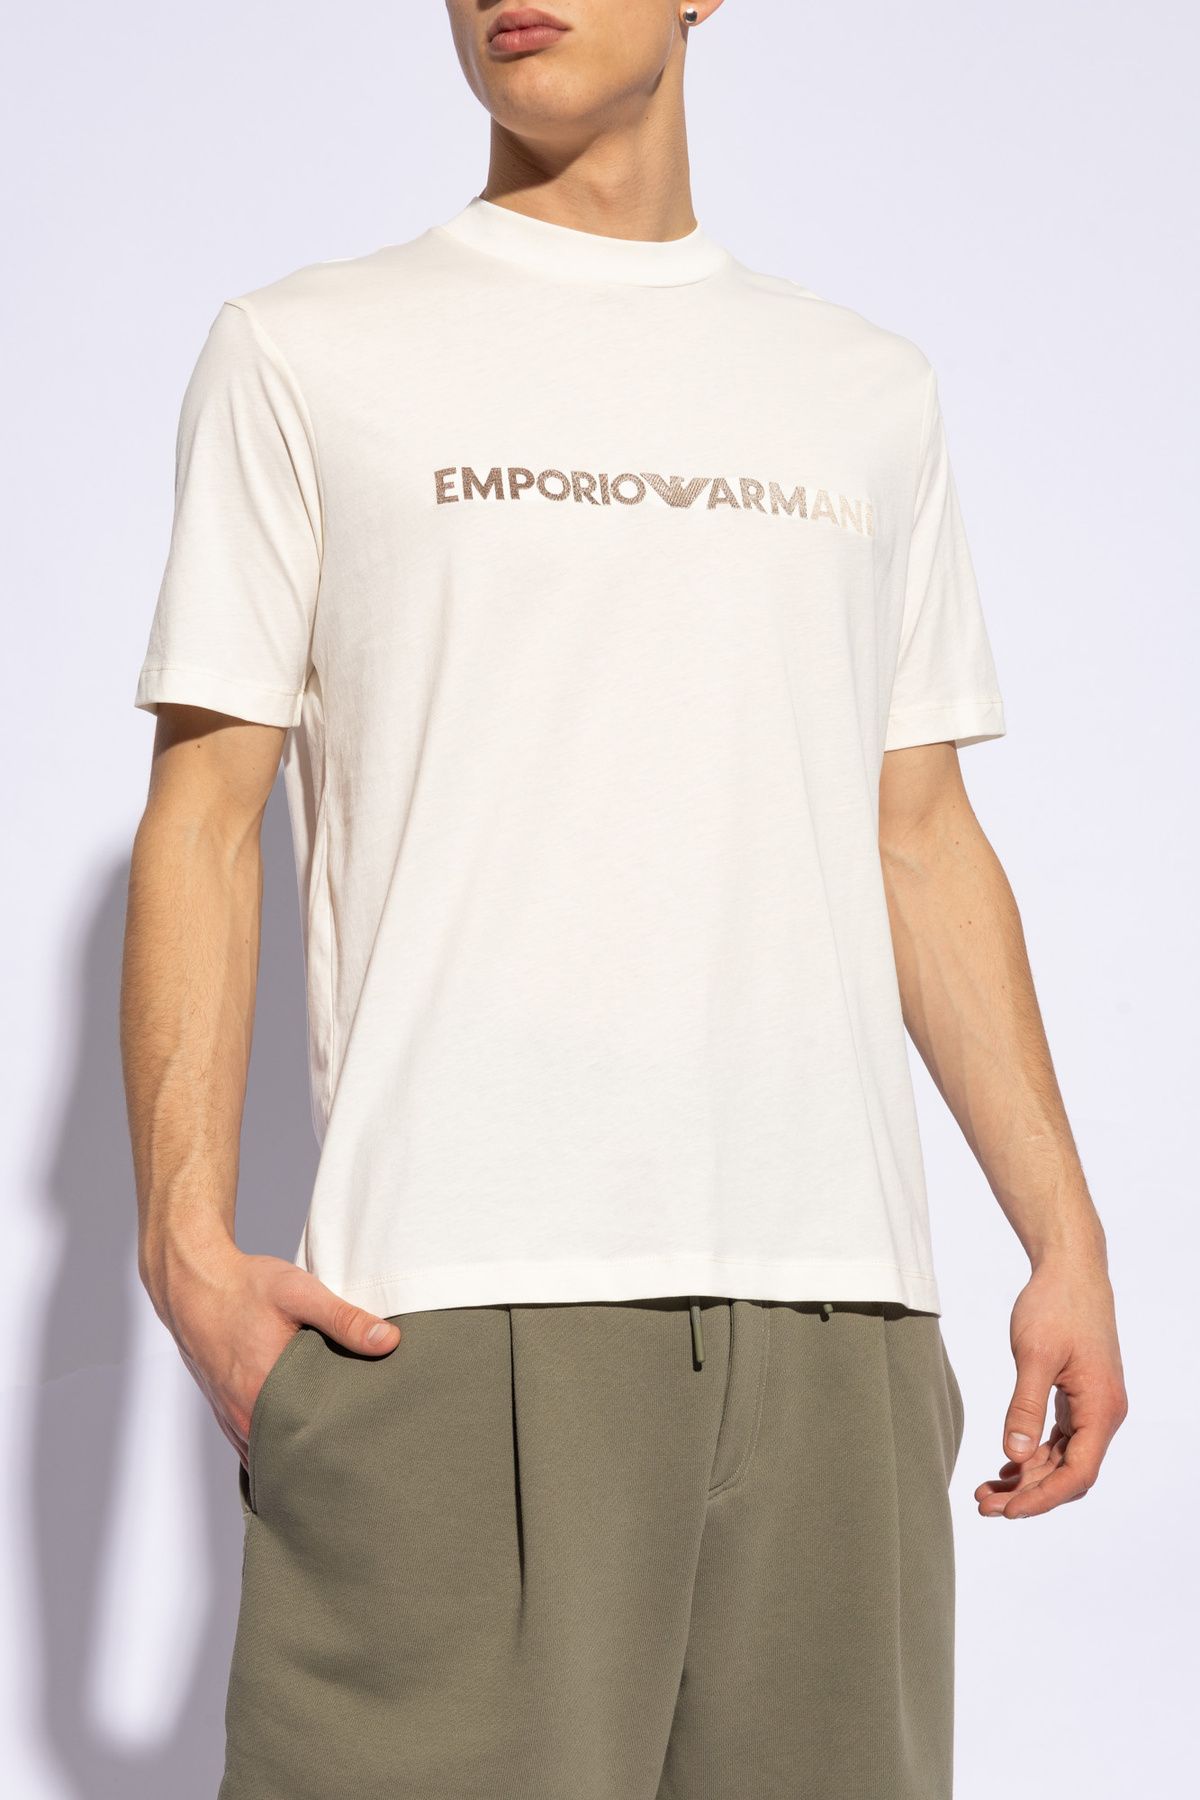 Emporio Armani Erkek Pamuklu Kısa Boy Rahat Kesim Günlük Ekru1 T-Shirt 3D1TG3 1JPZZ-01B1